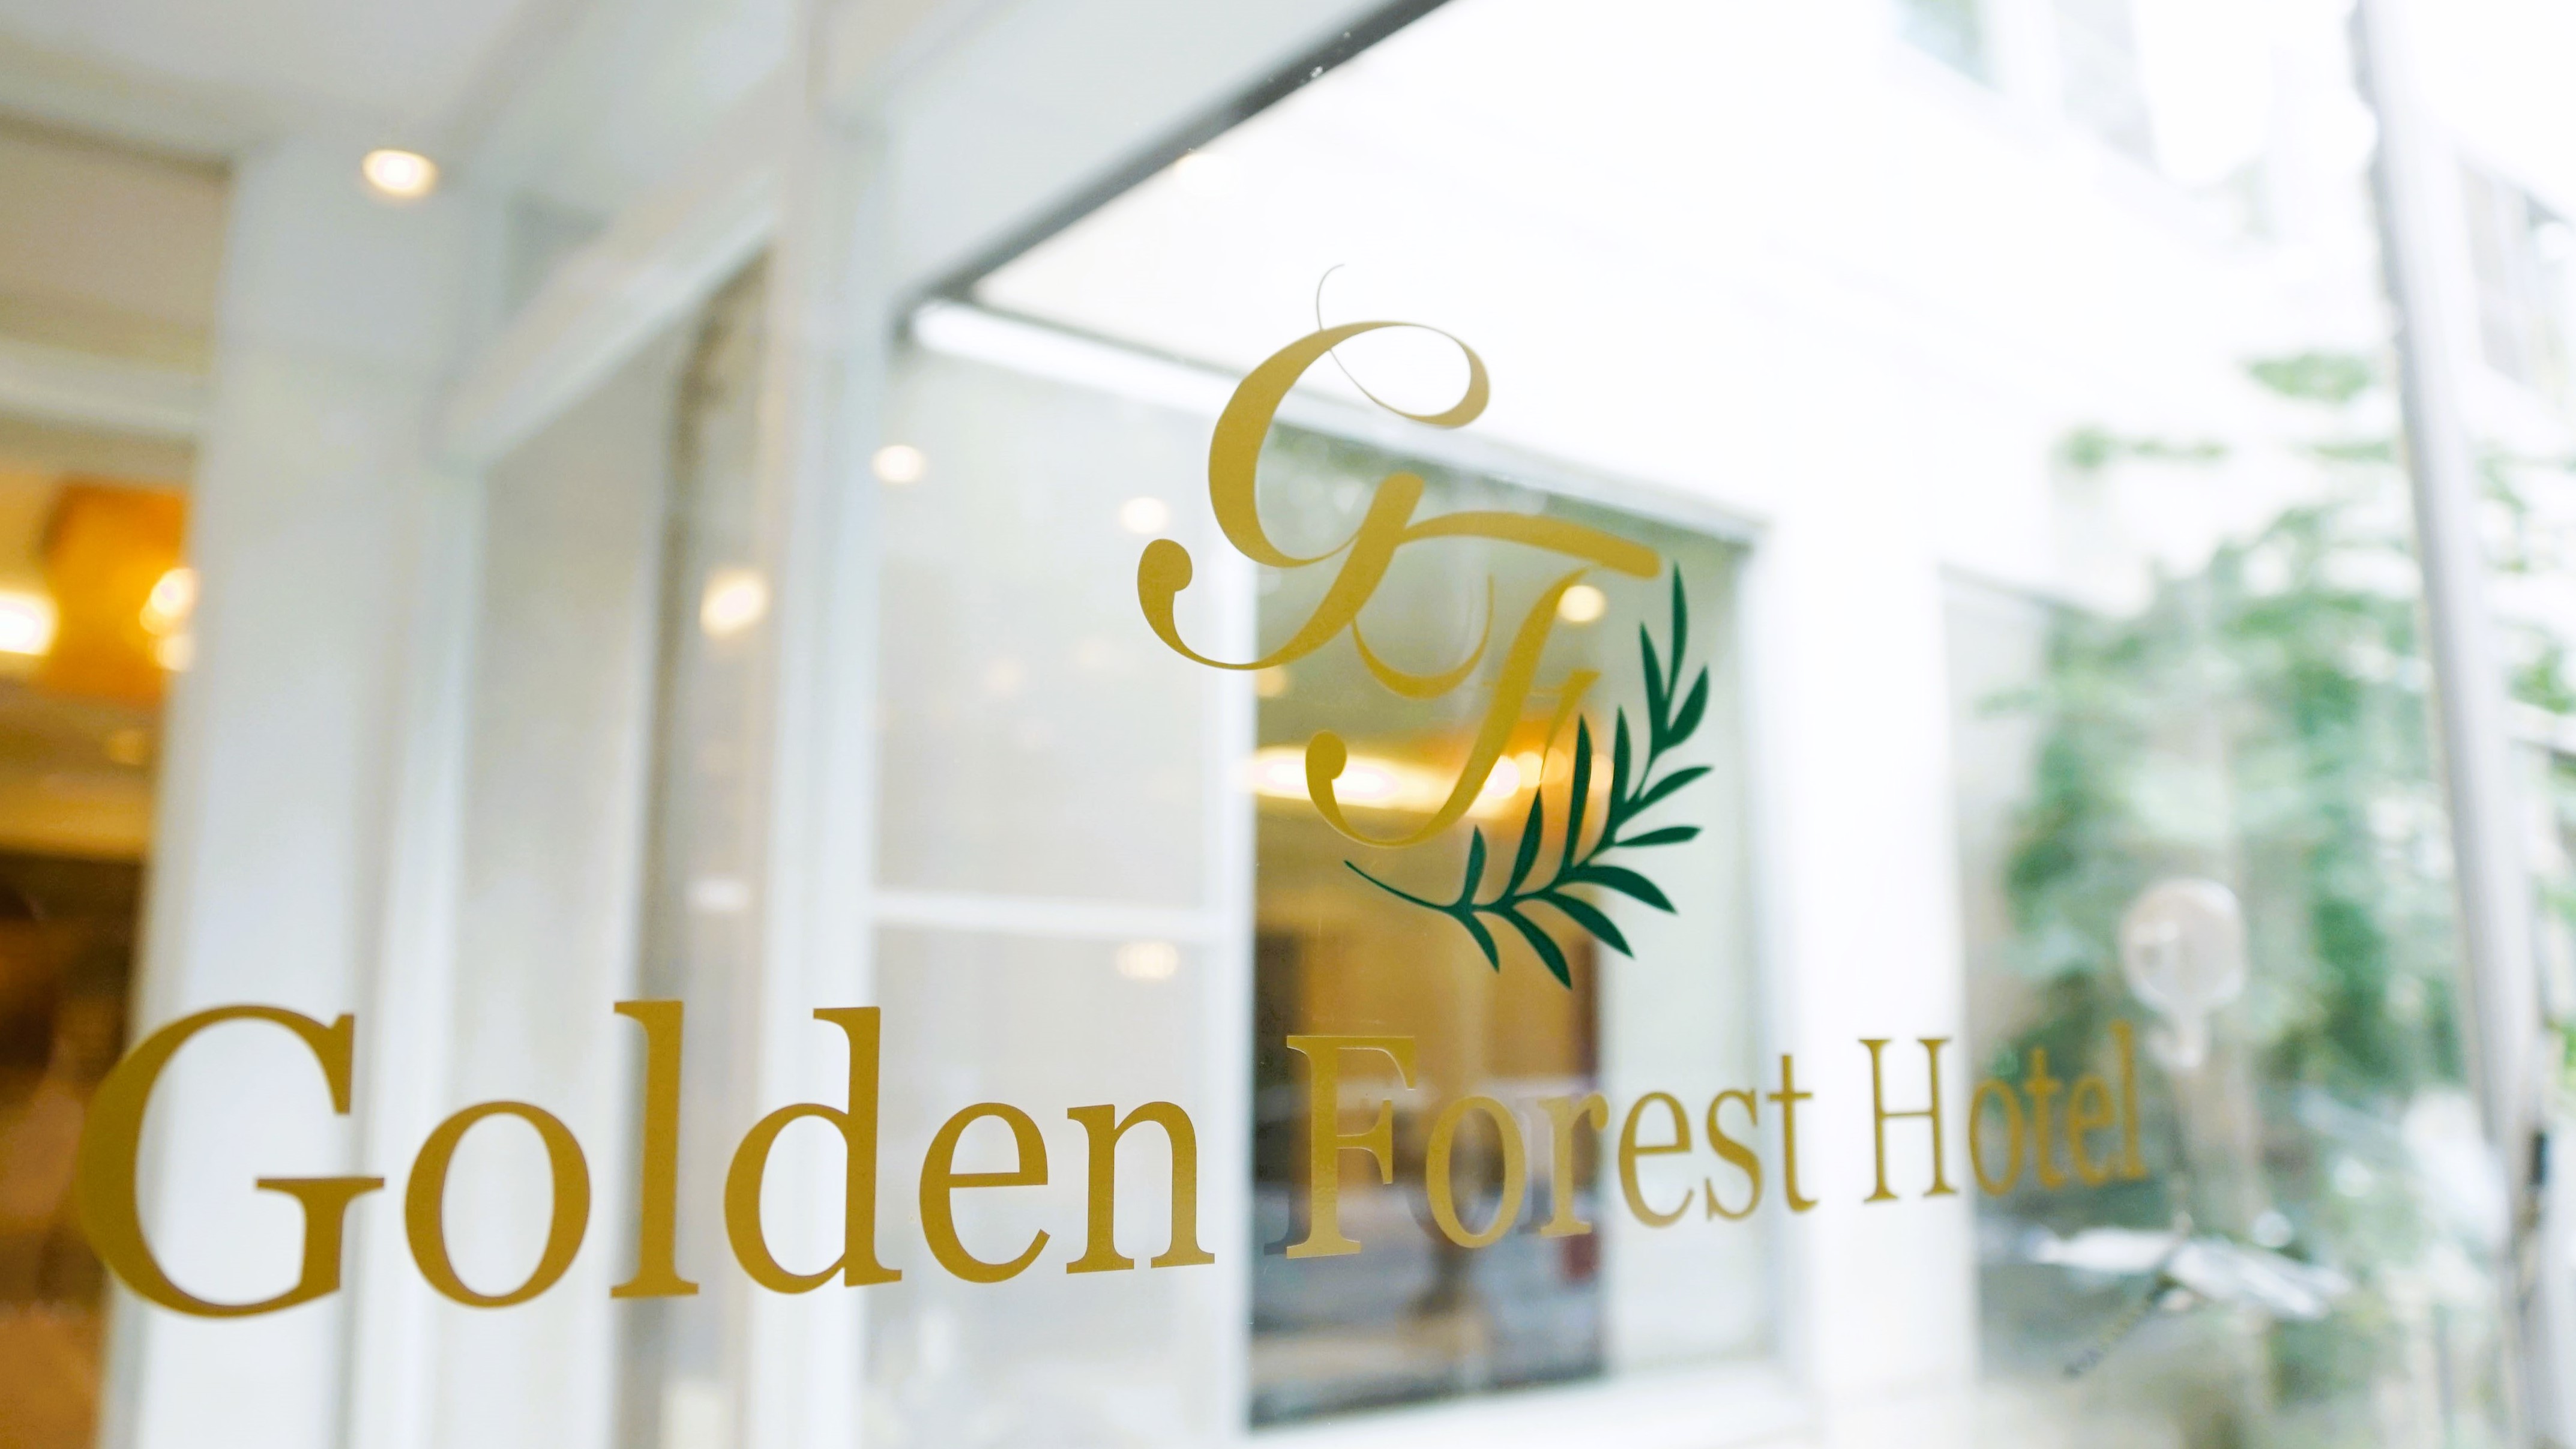 Kitakaruizawa Golden Forest Hotel